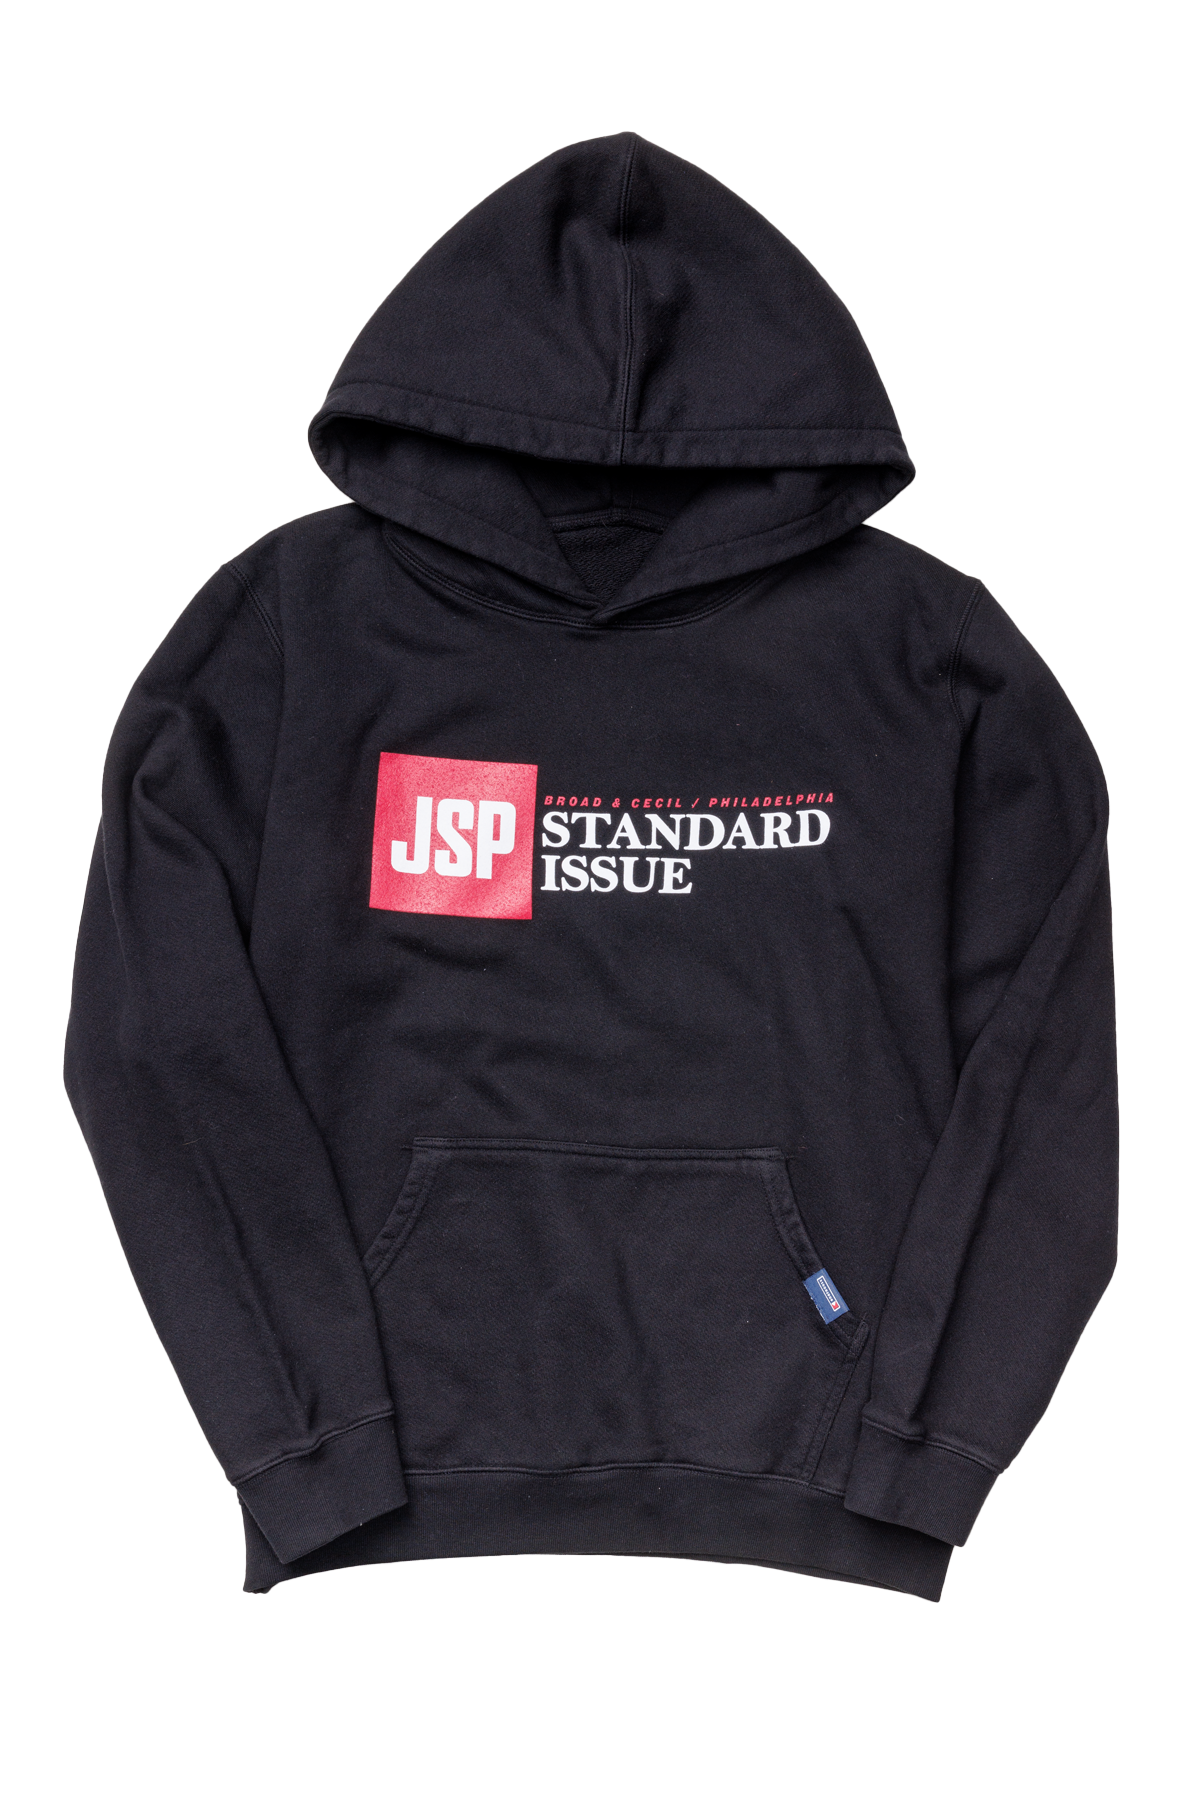 JSP X BH X TU Standard Hoody Black